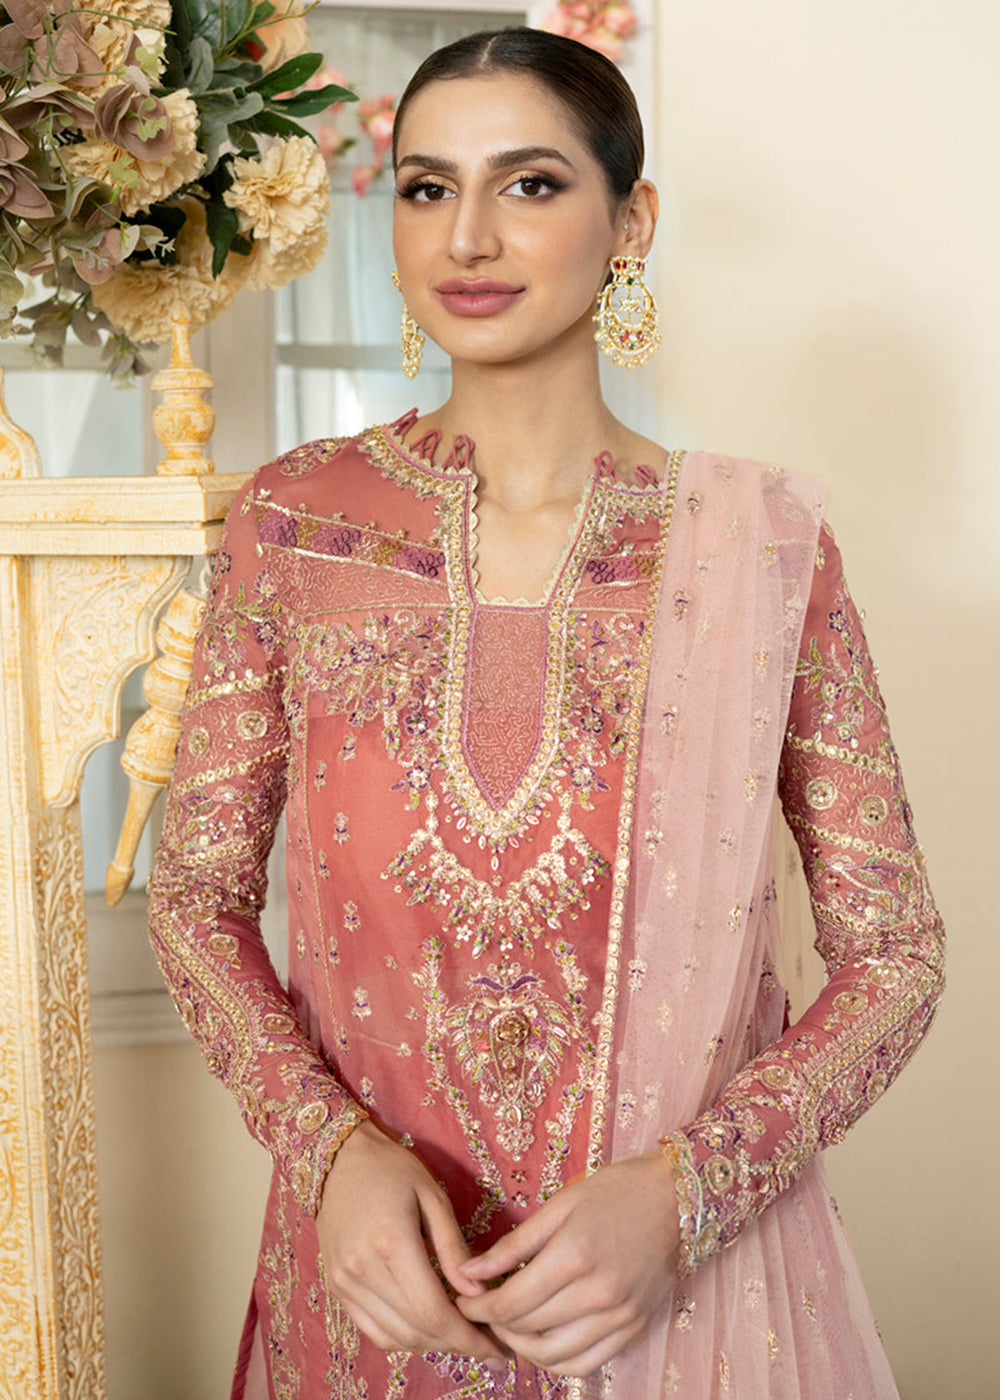 Buy Now Dilnaaz Wedding Formals 2023 by Qalamkar | DN-05 - SAMARA Online in USA, UK, Canada & Worldwide at Empress Clothing. 